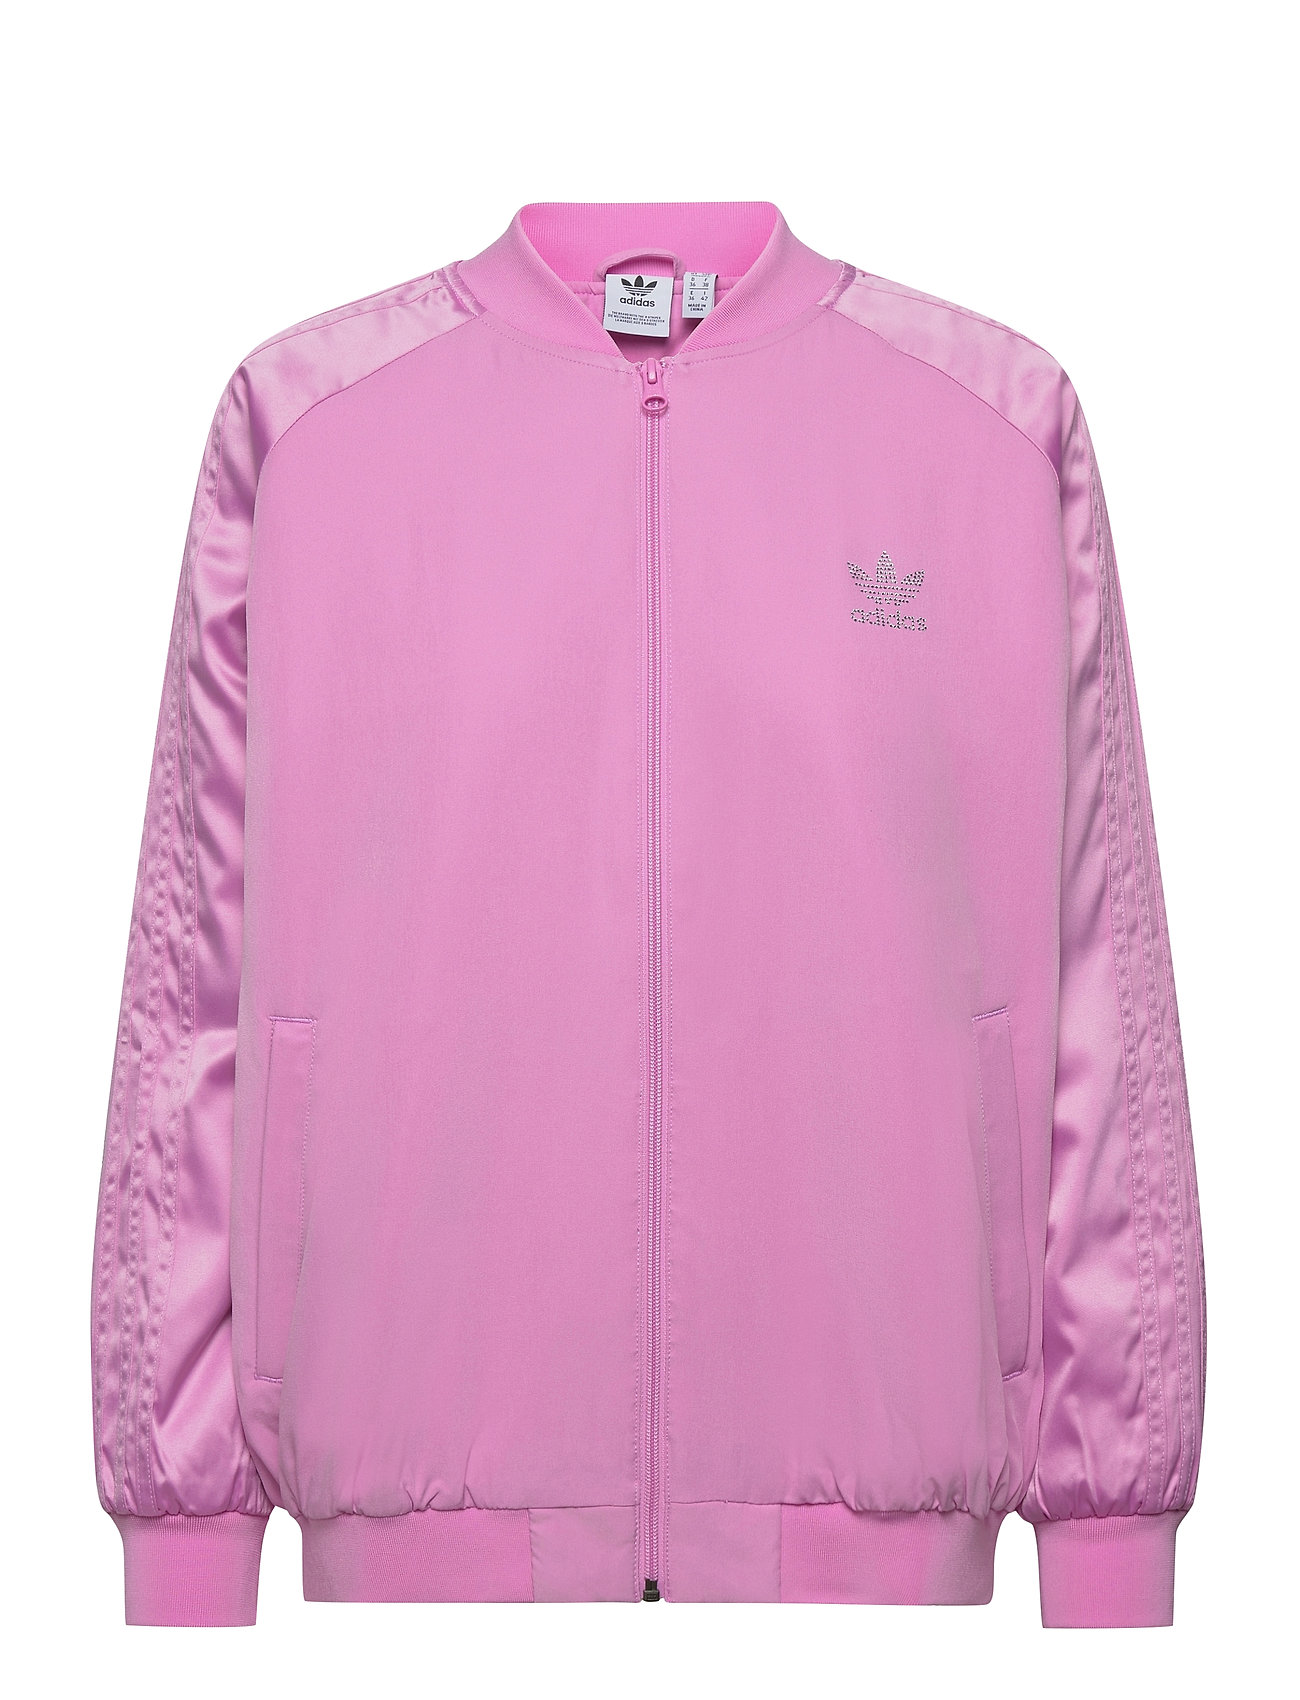 2000 Luxe Bomber Jacket W Bombertakki Vaaleanpunainen Adidas Originals, adidas Originals